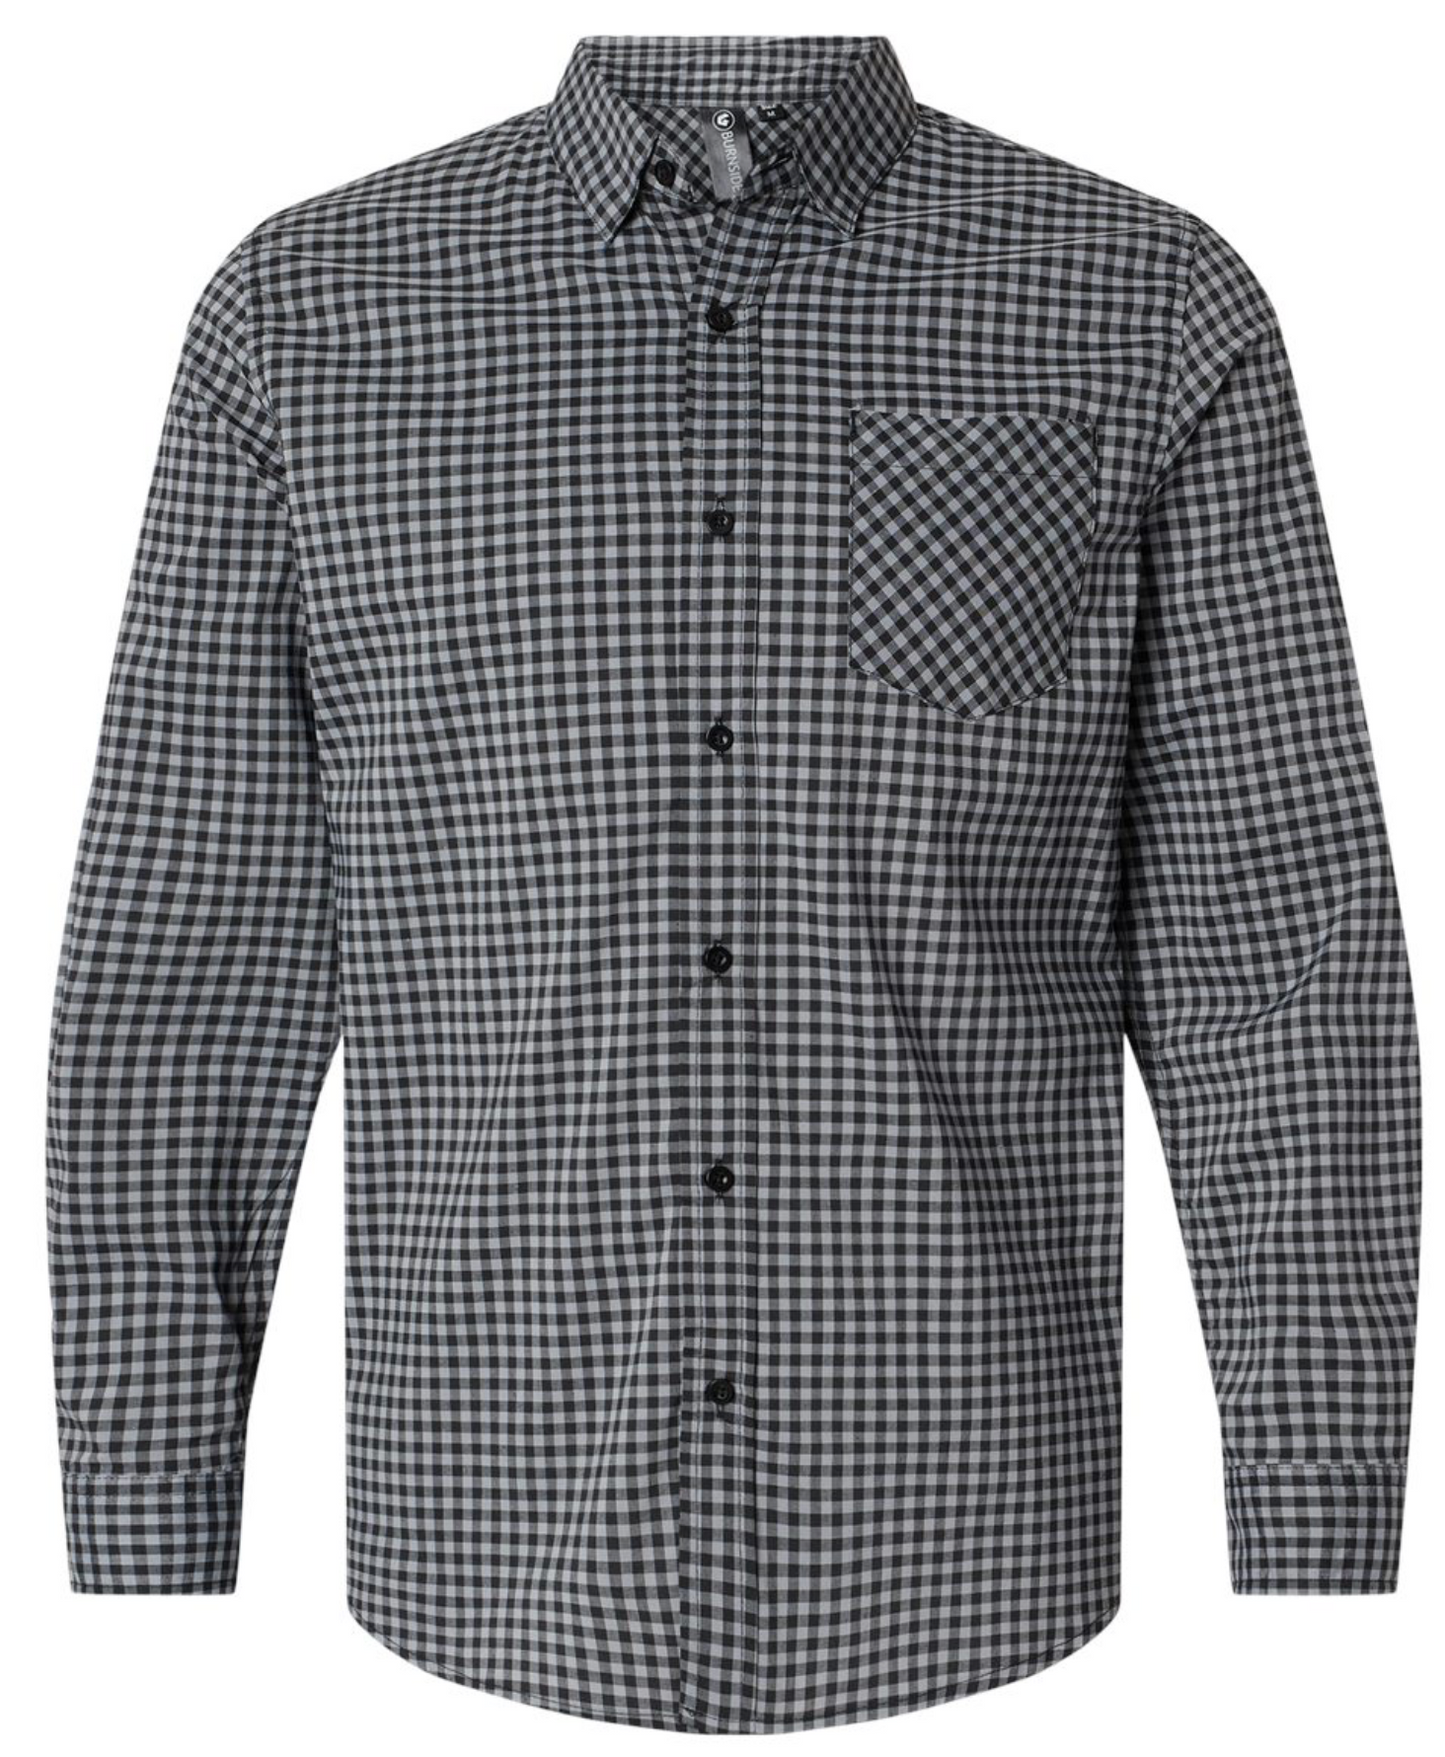 Black & Grey Checkered Shirt